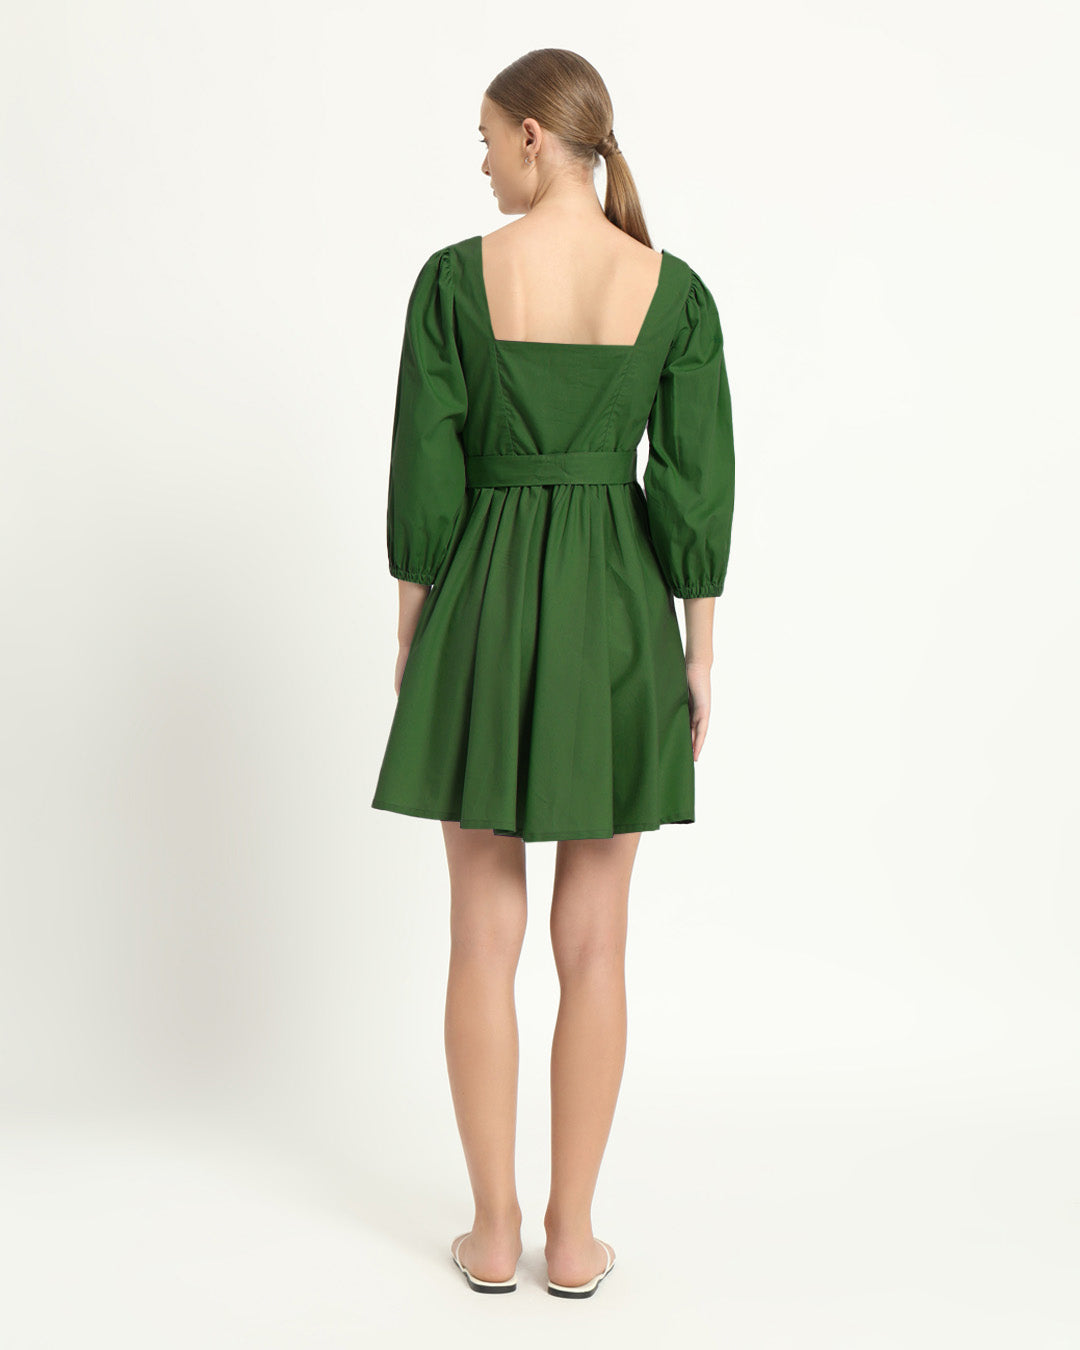 The Winklern Emerald Cotton Dress